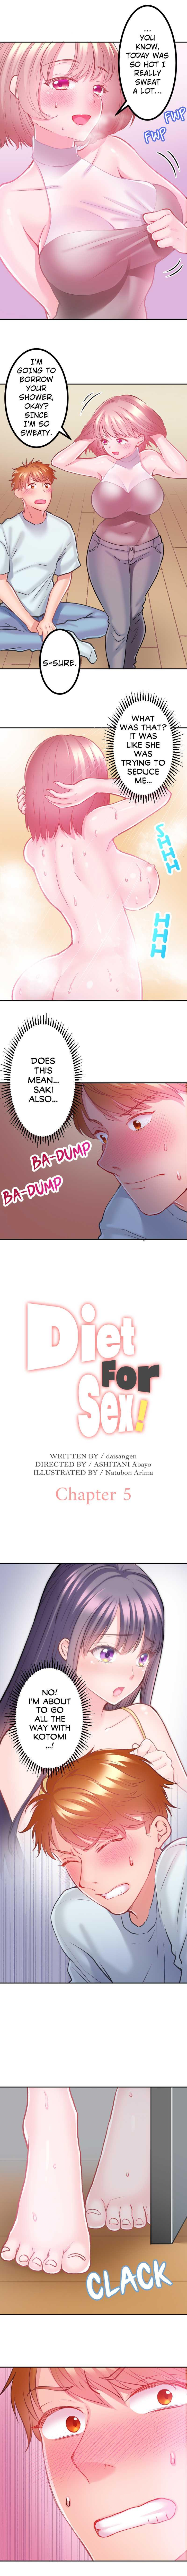 Diet For Sex! 52